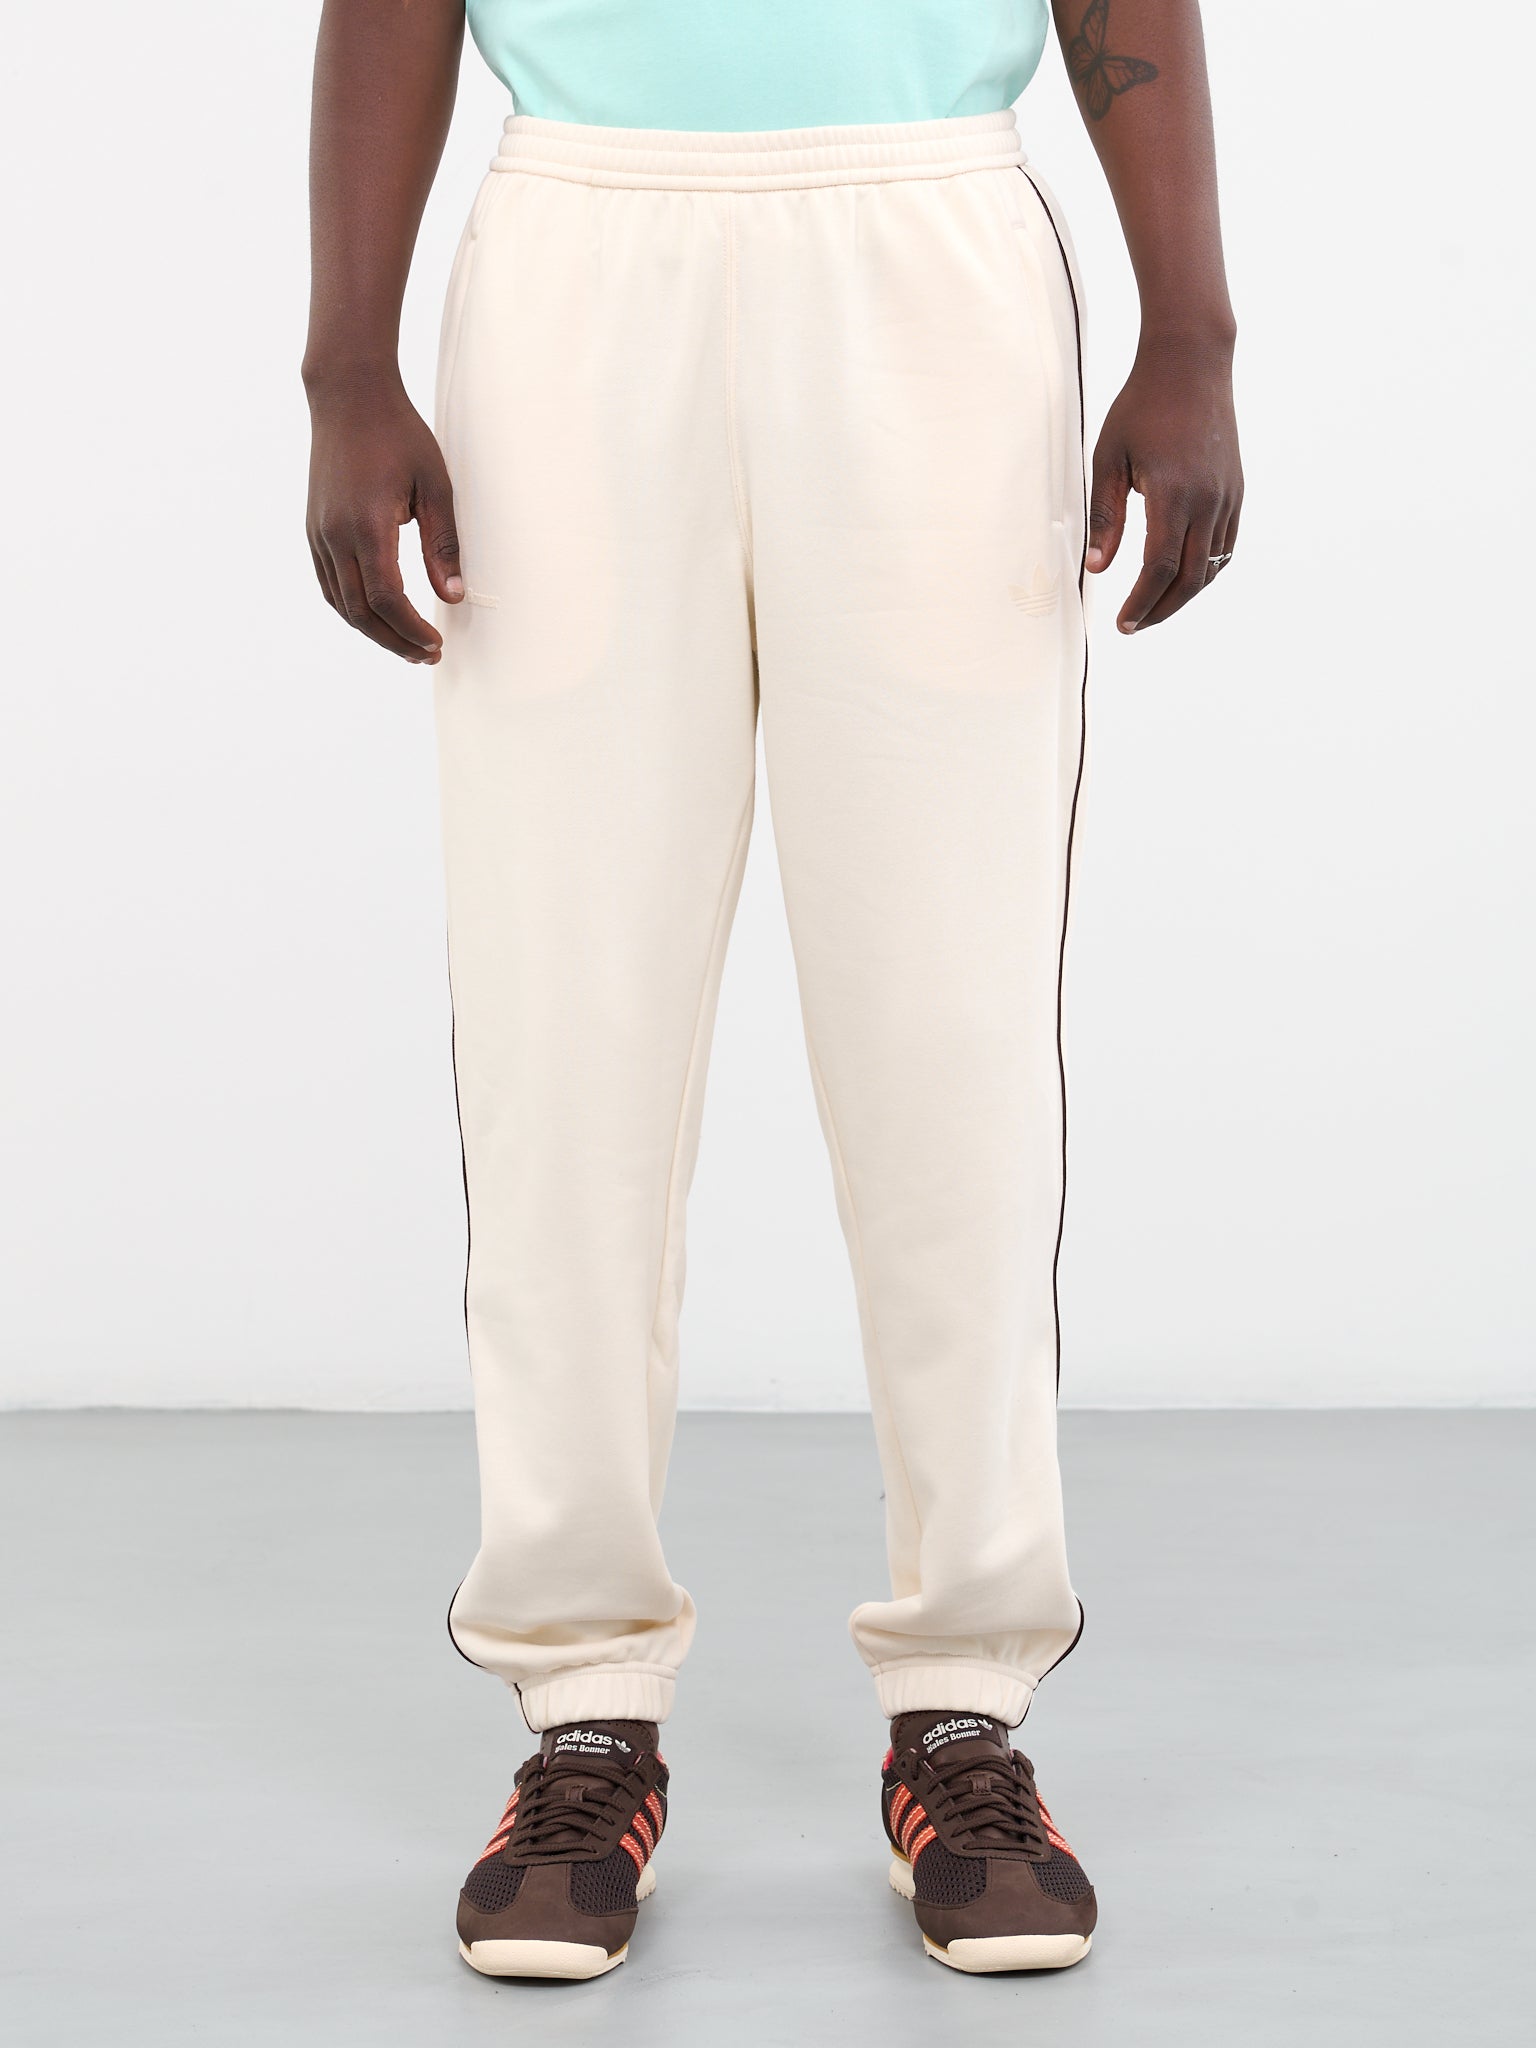 Pants (IN3008-WONDER-WHITE)